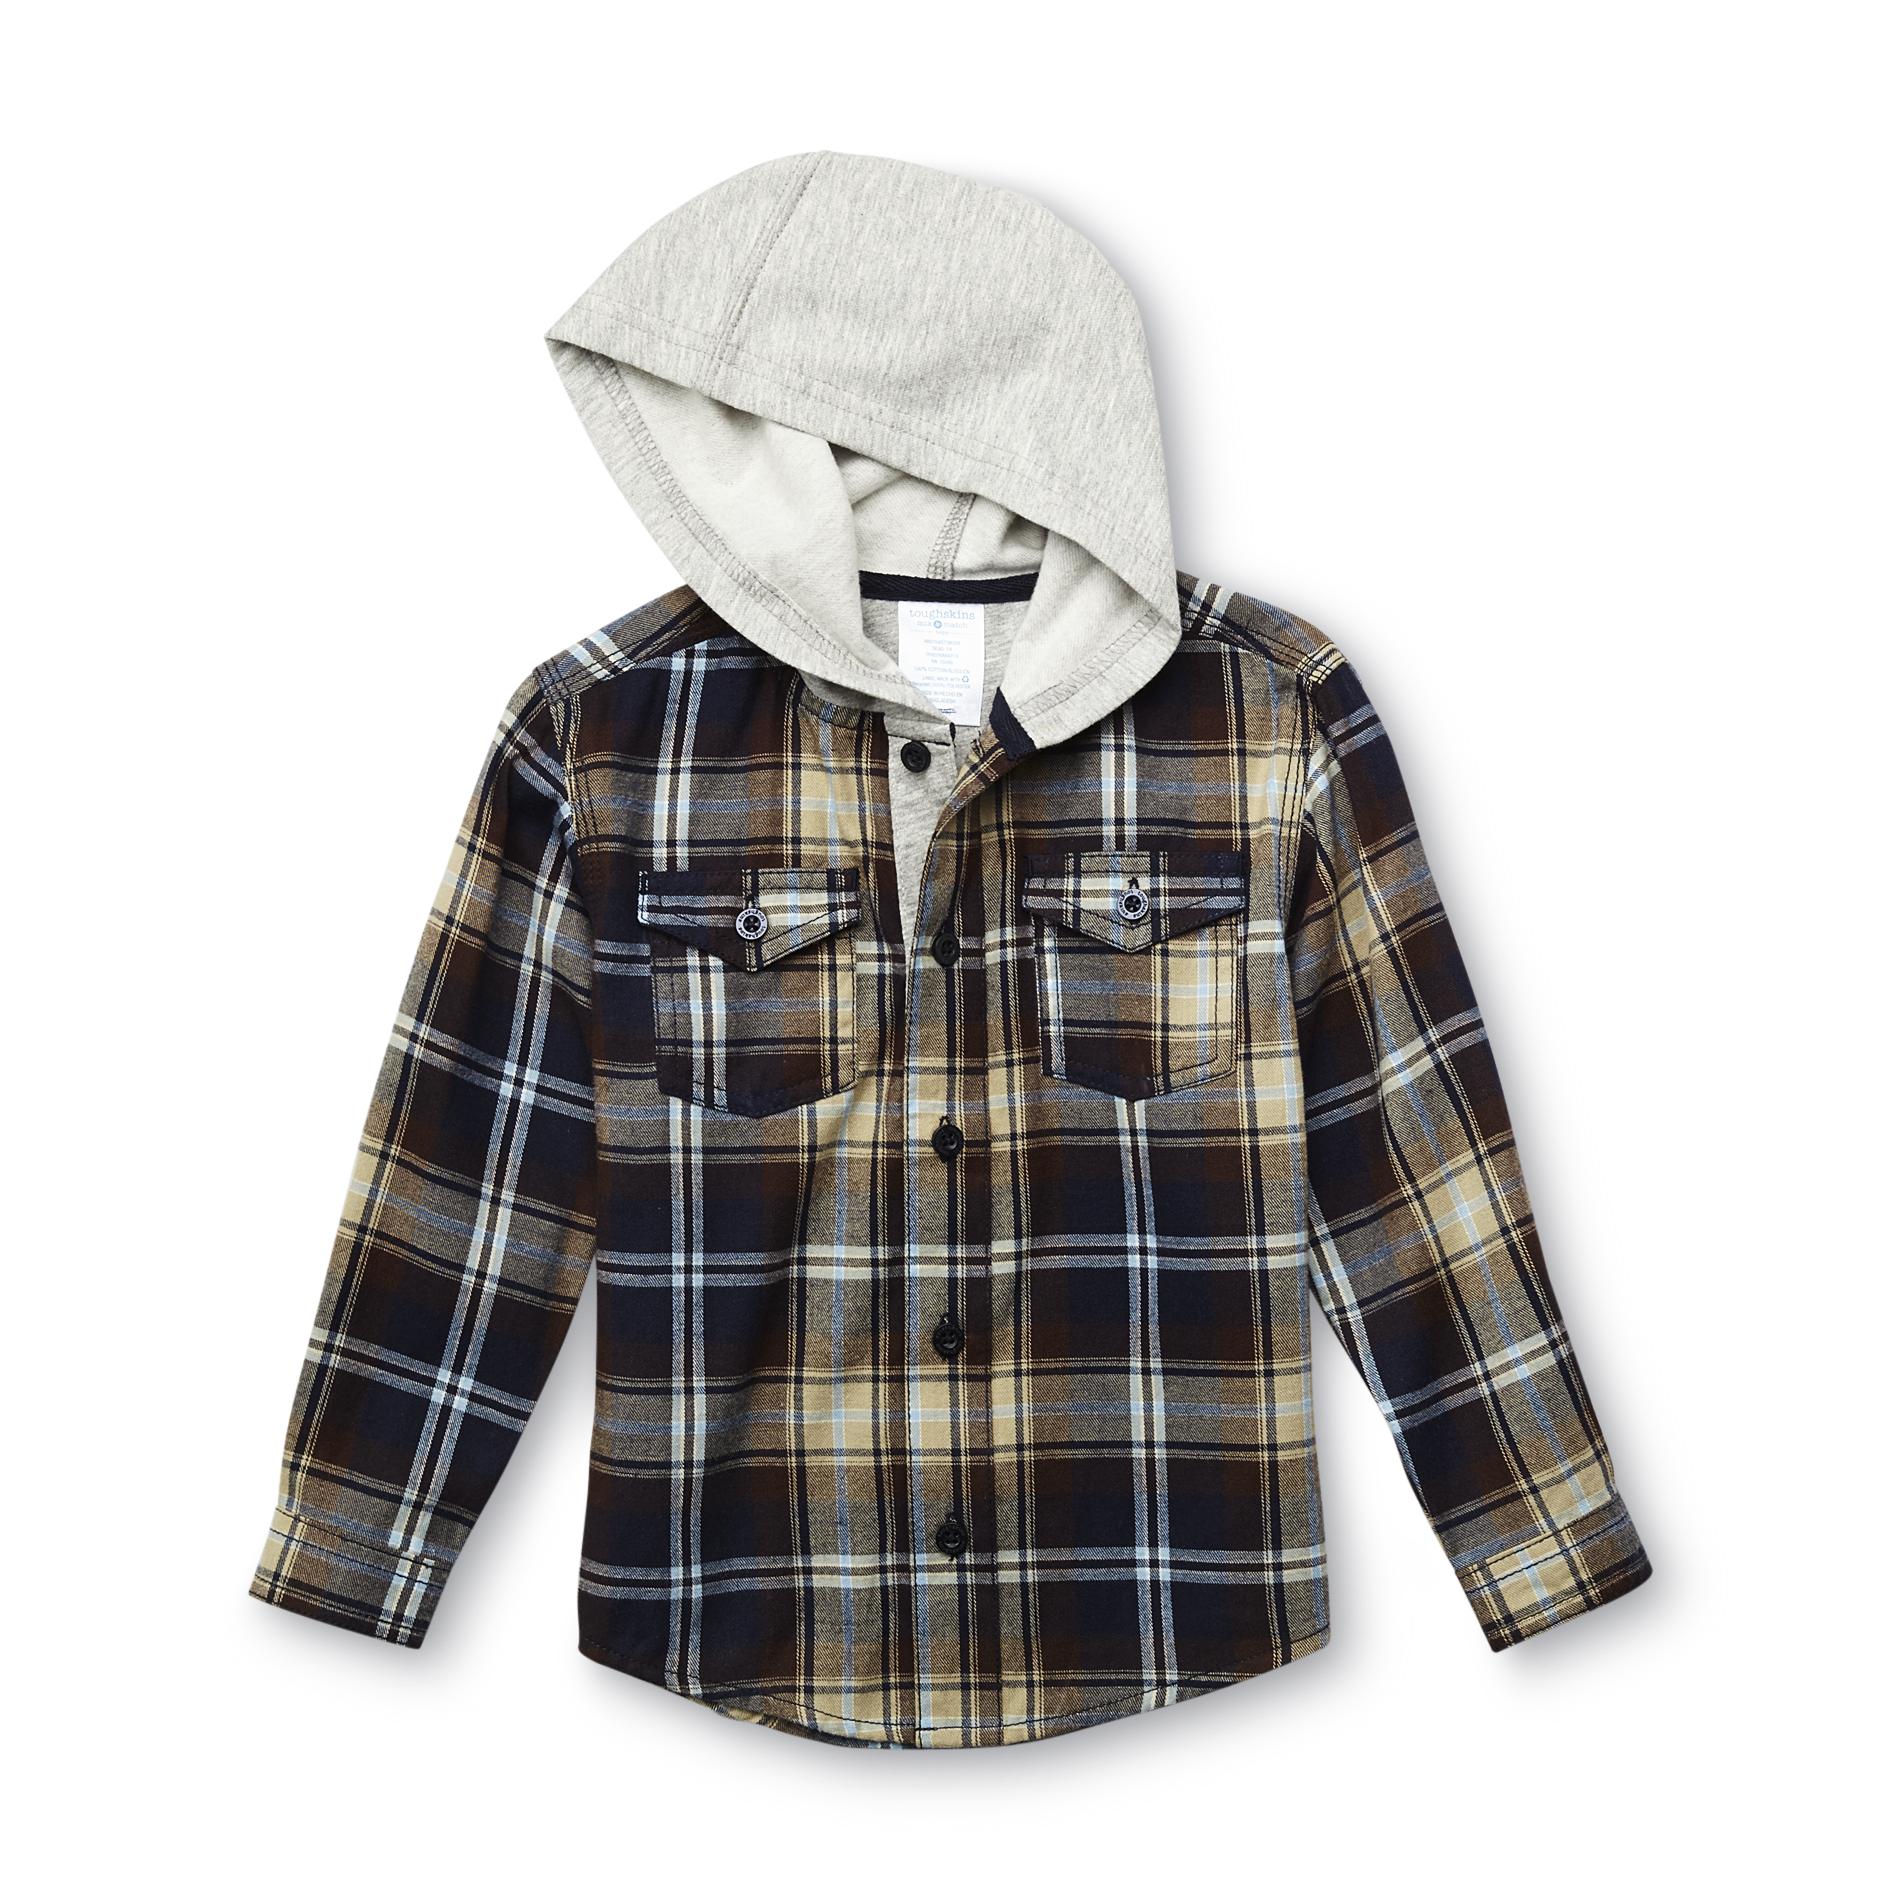 Toughskins Infant & Toddler Boy's Hooded Flannel Shirt - Plaid